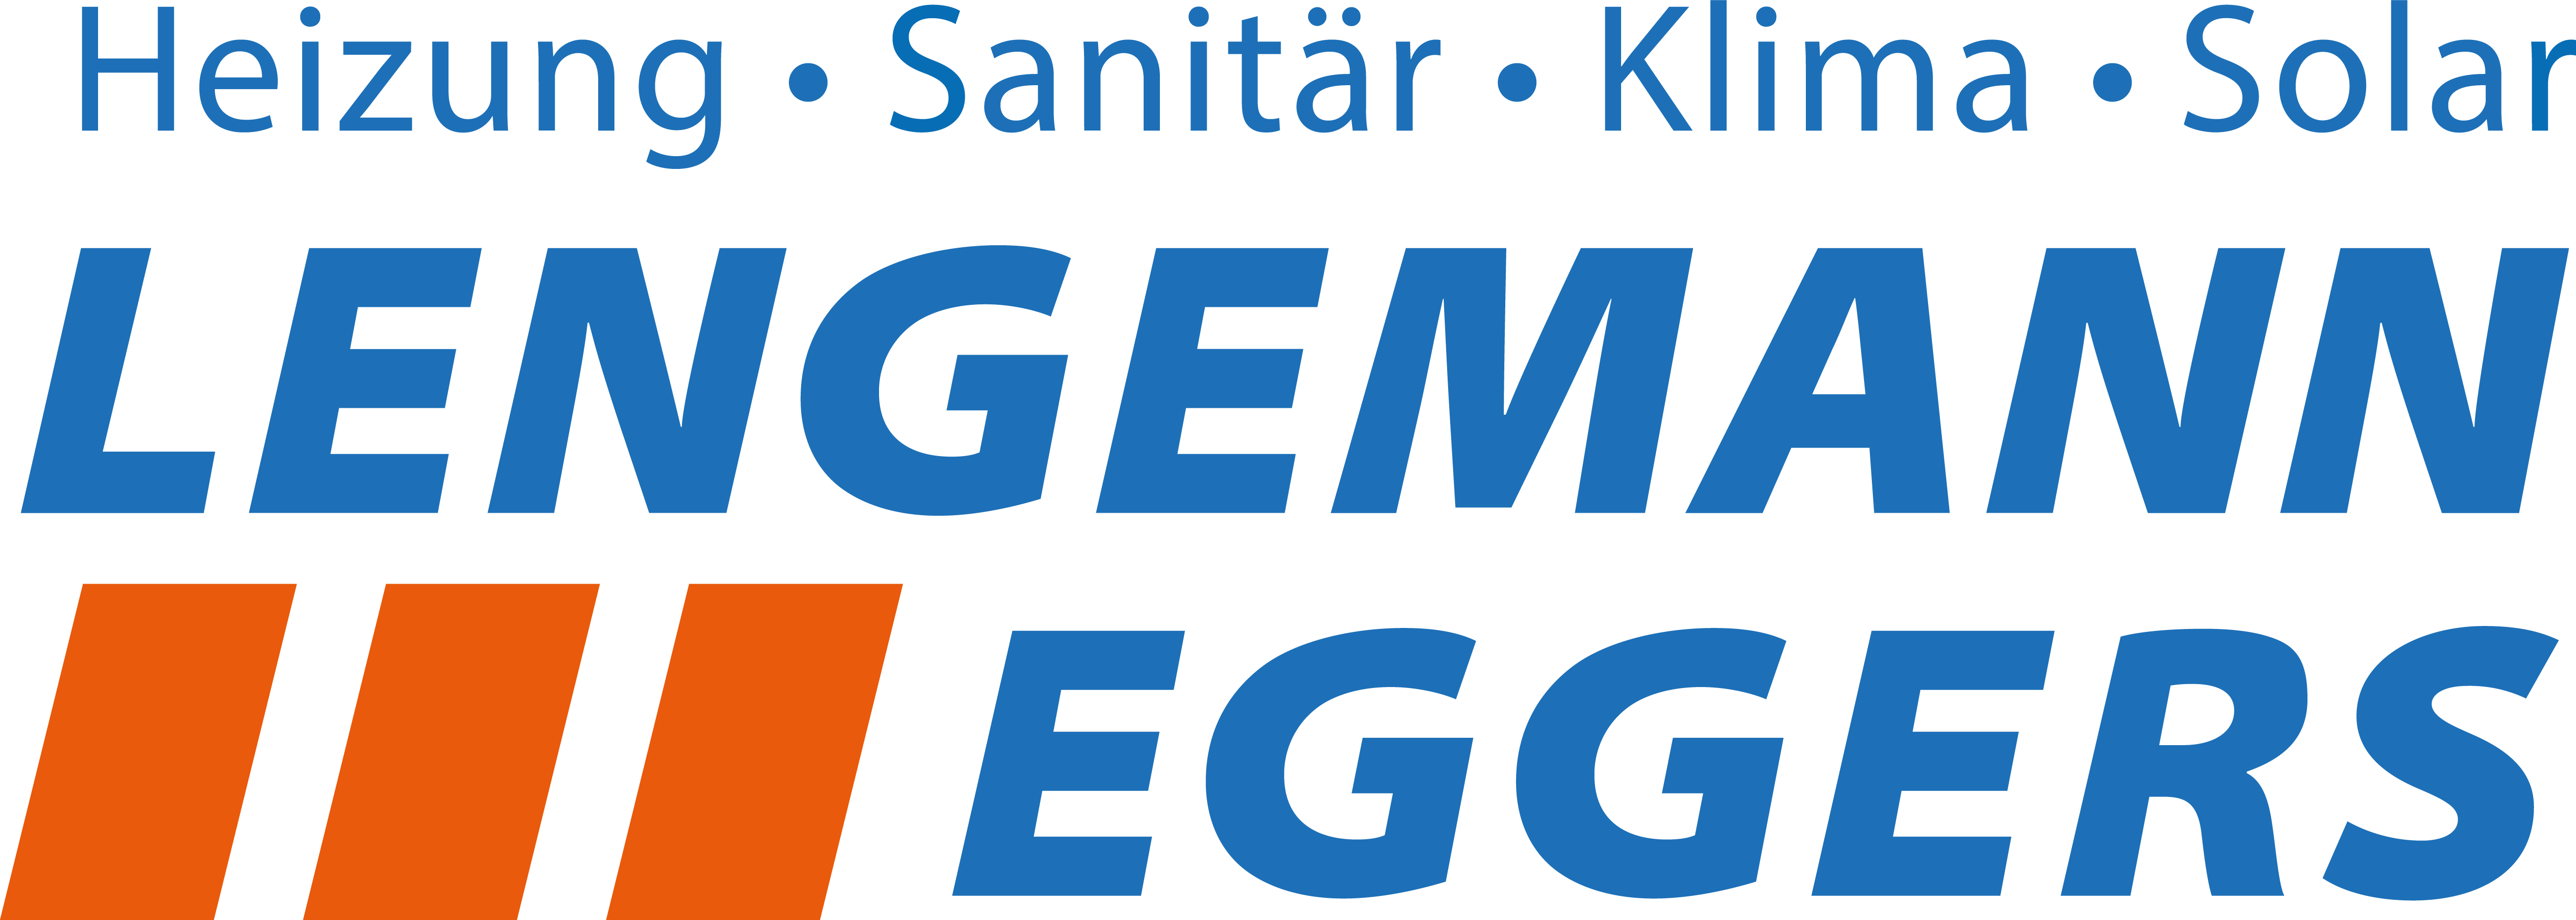 lengemann eggers logo rgb mehrfarbig 300ppi